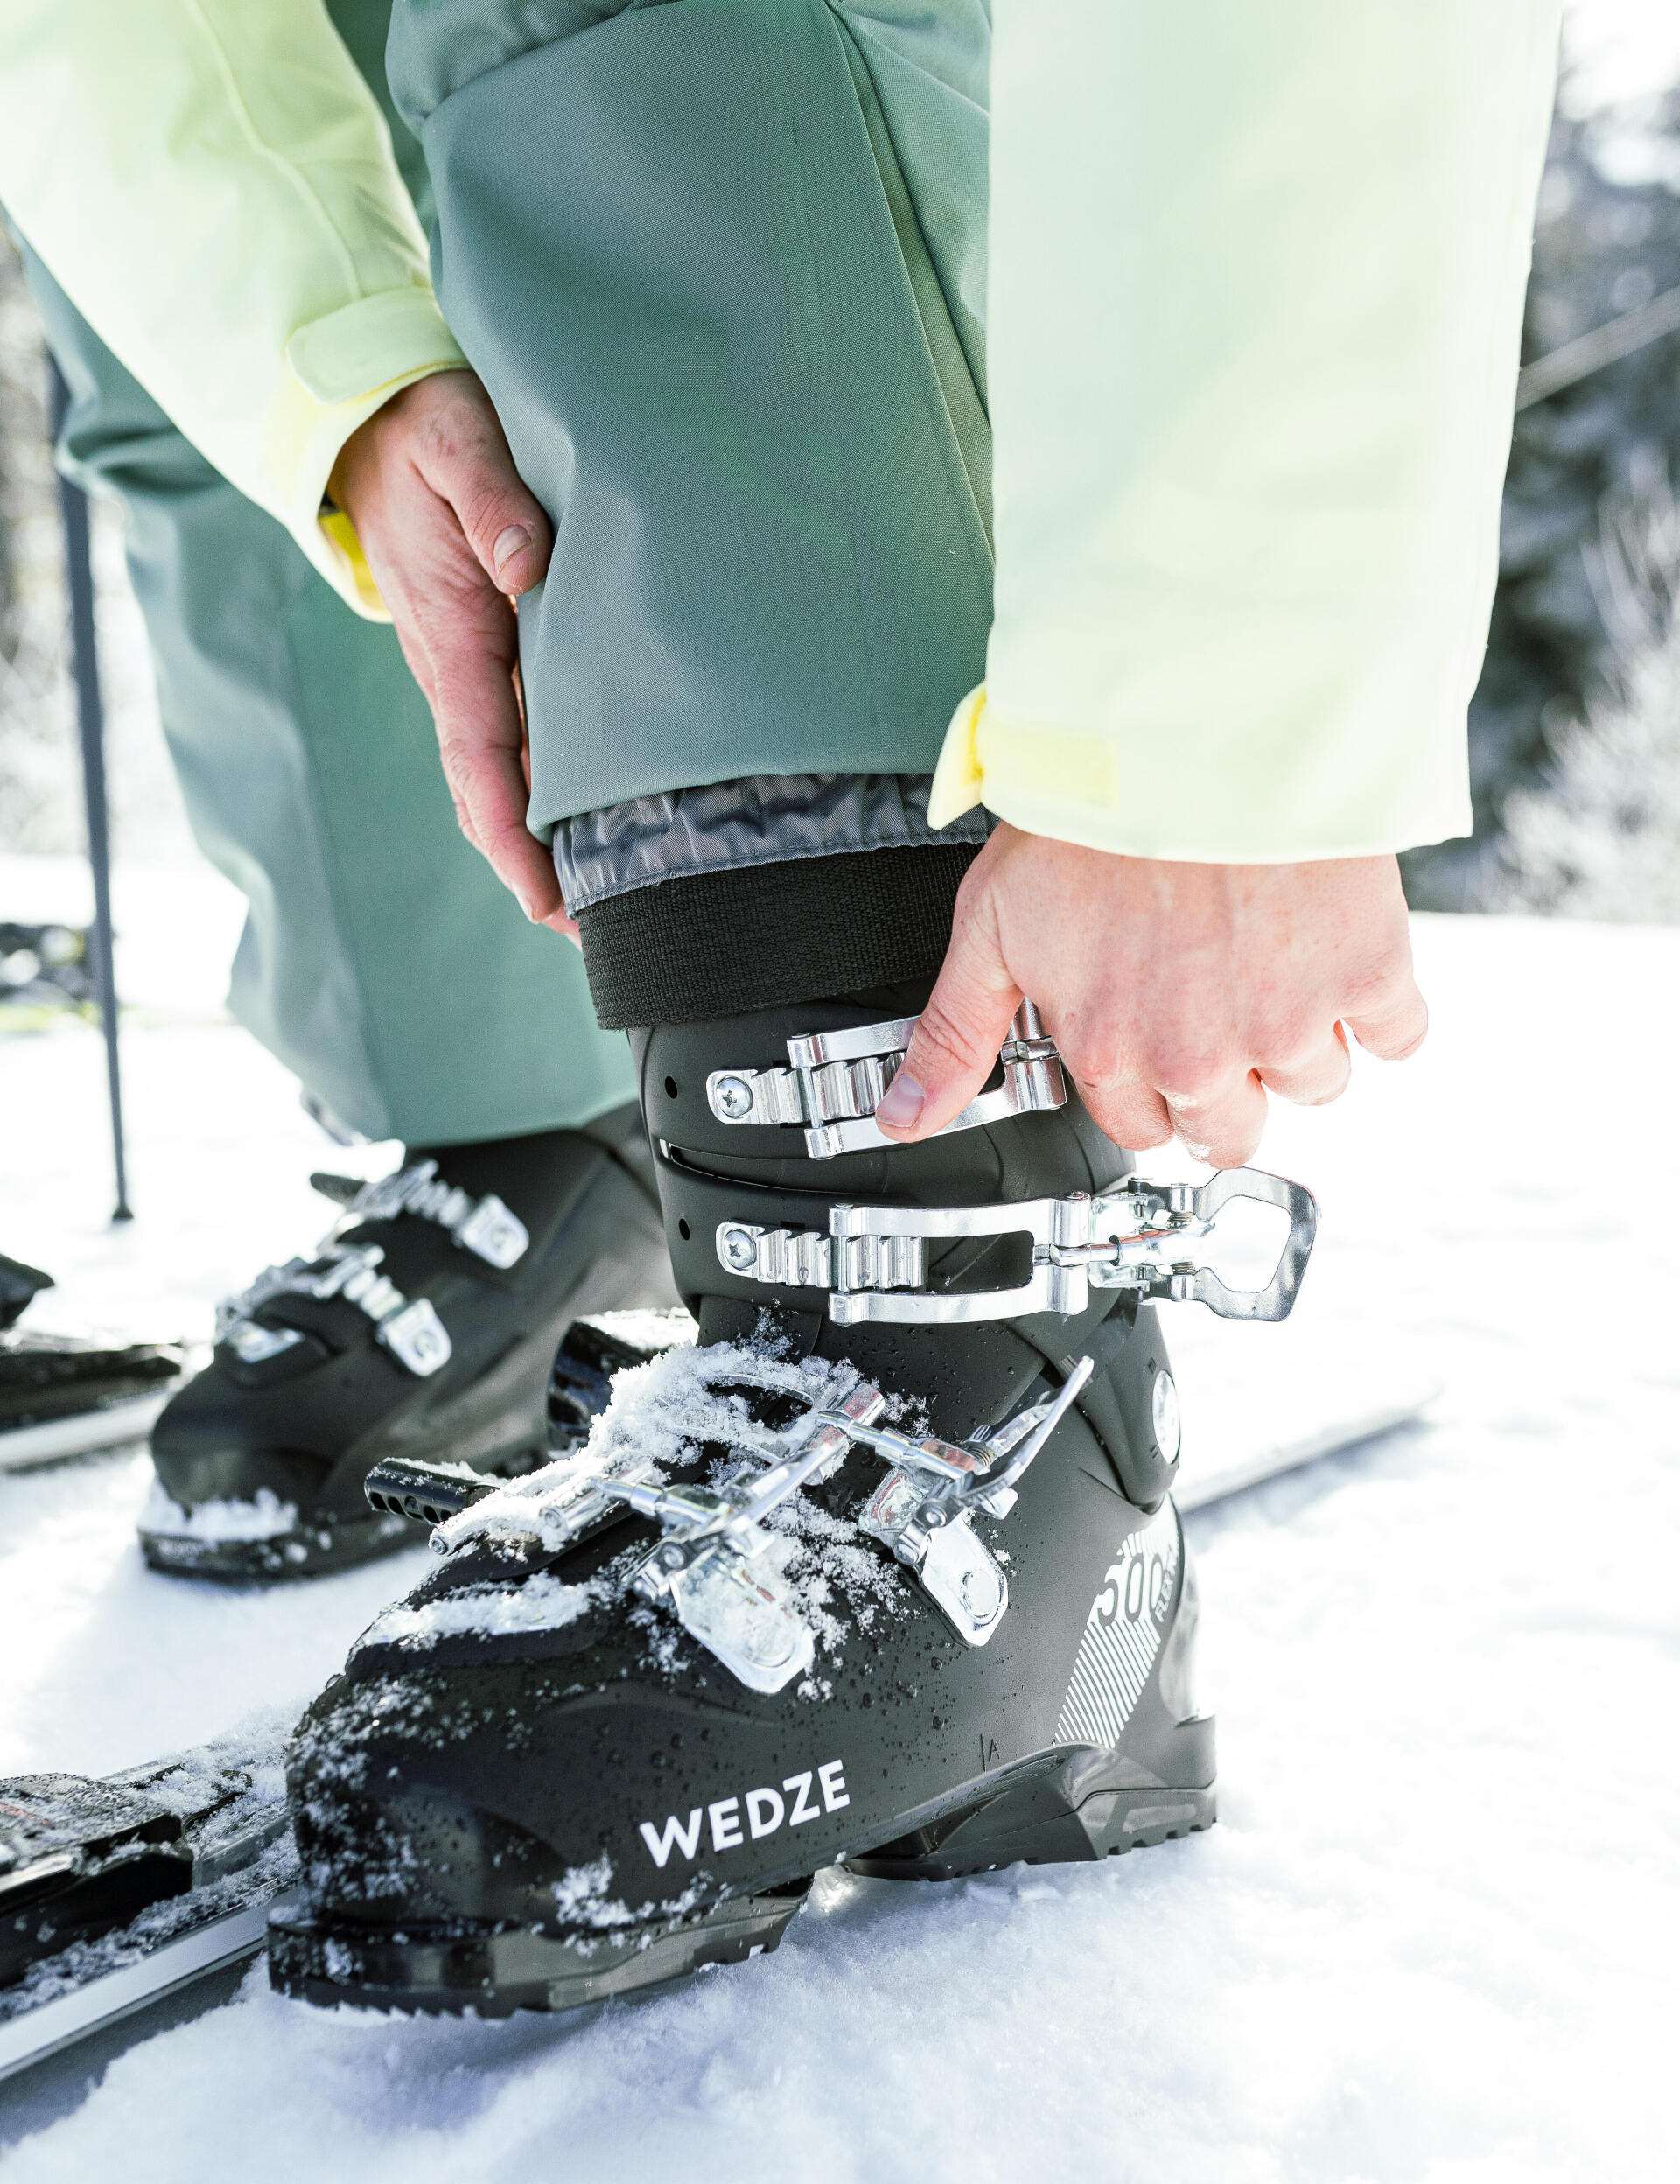 ISO 5355 downhill ski boot standard